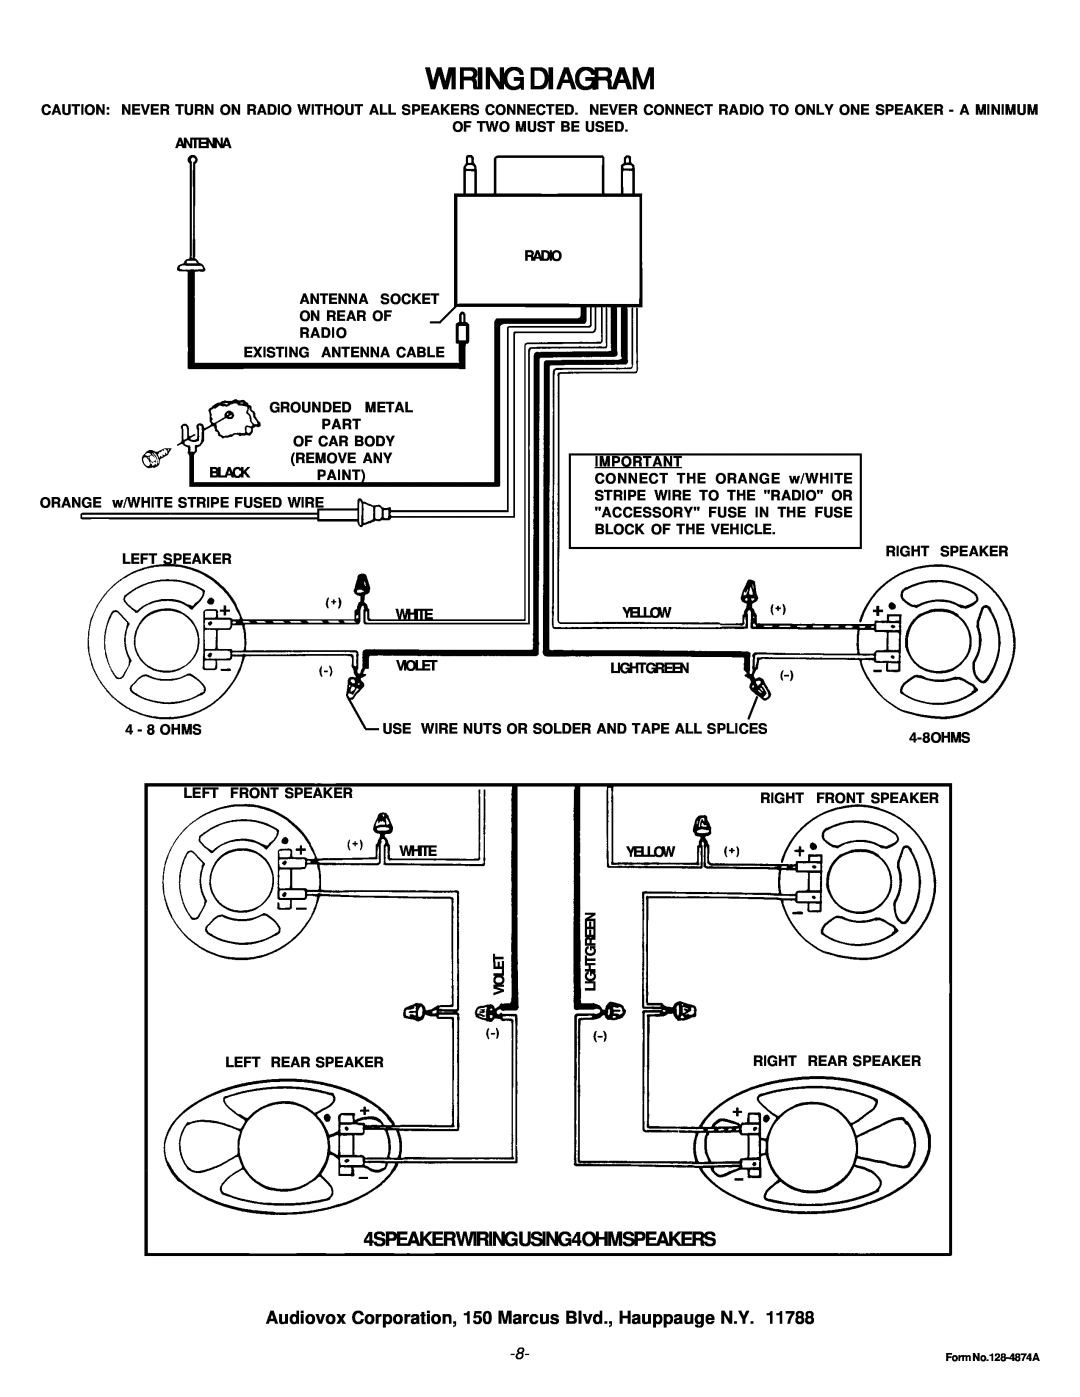 Audiovox 128-4874A installation instructions Wiring Diagram, 4SPEAKERWIRINGUSING4OHMSPEAKERS 